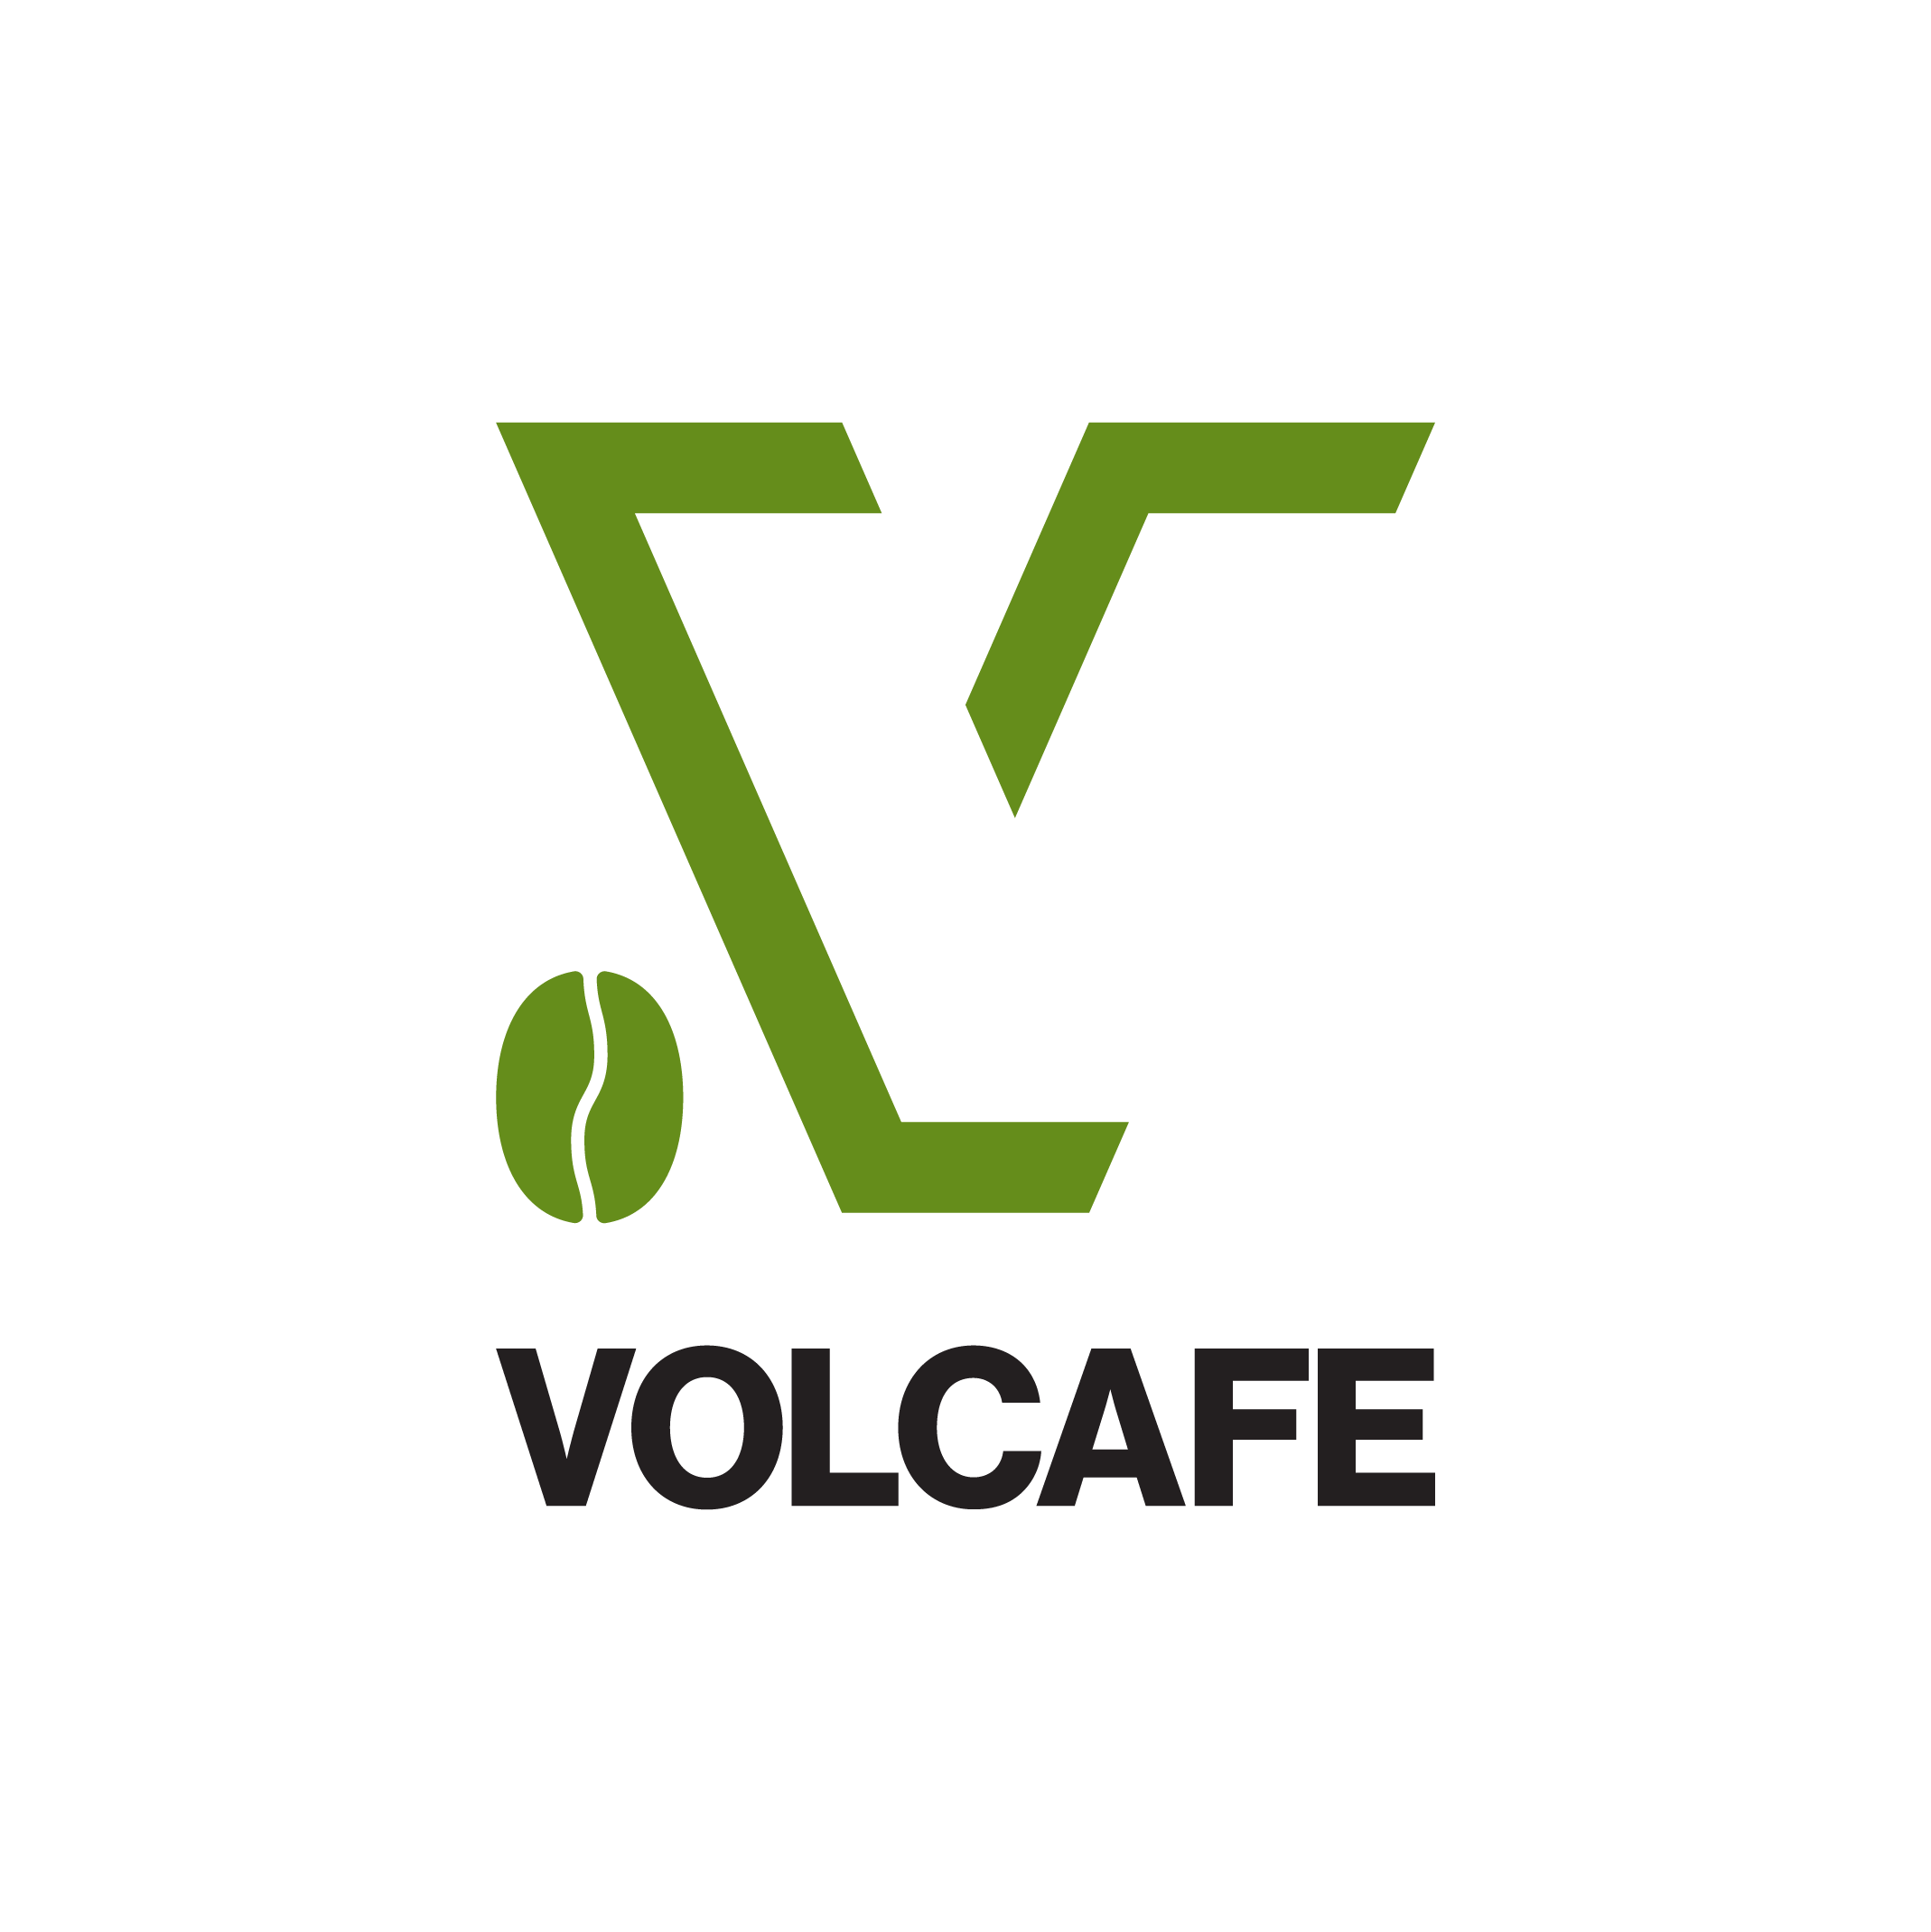 Volcafe Vietnam Co., ltd